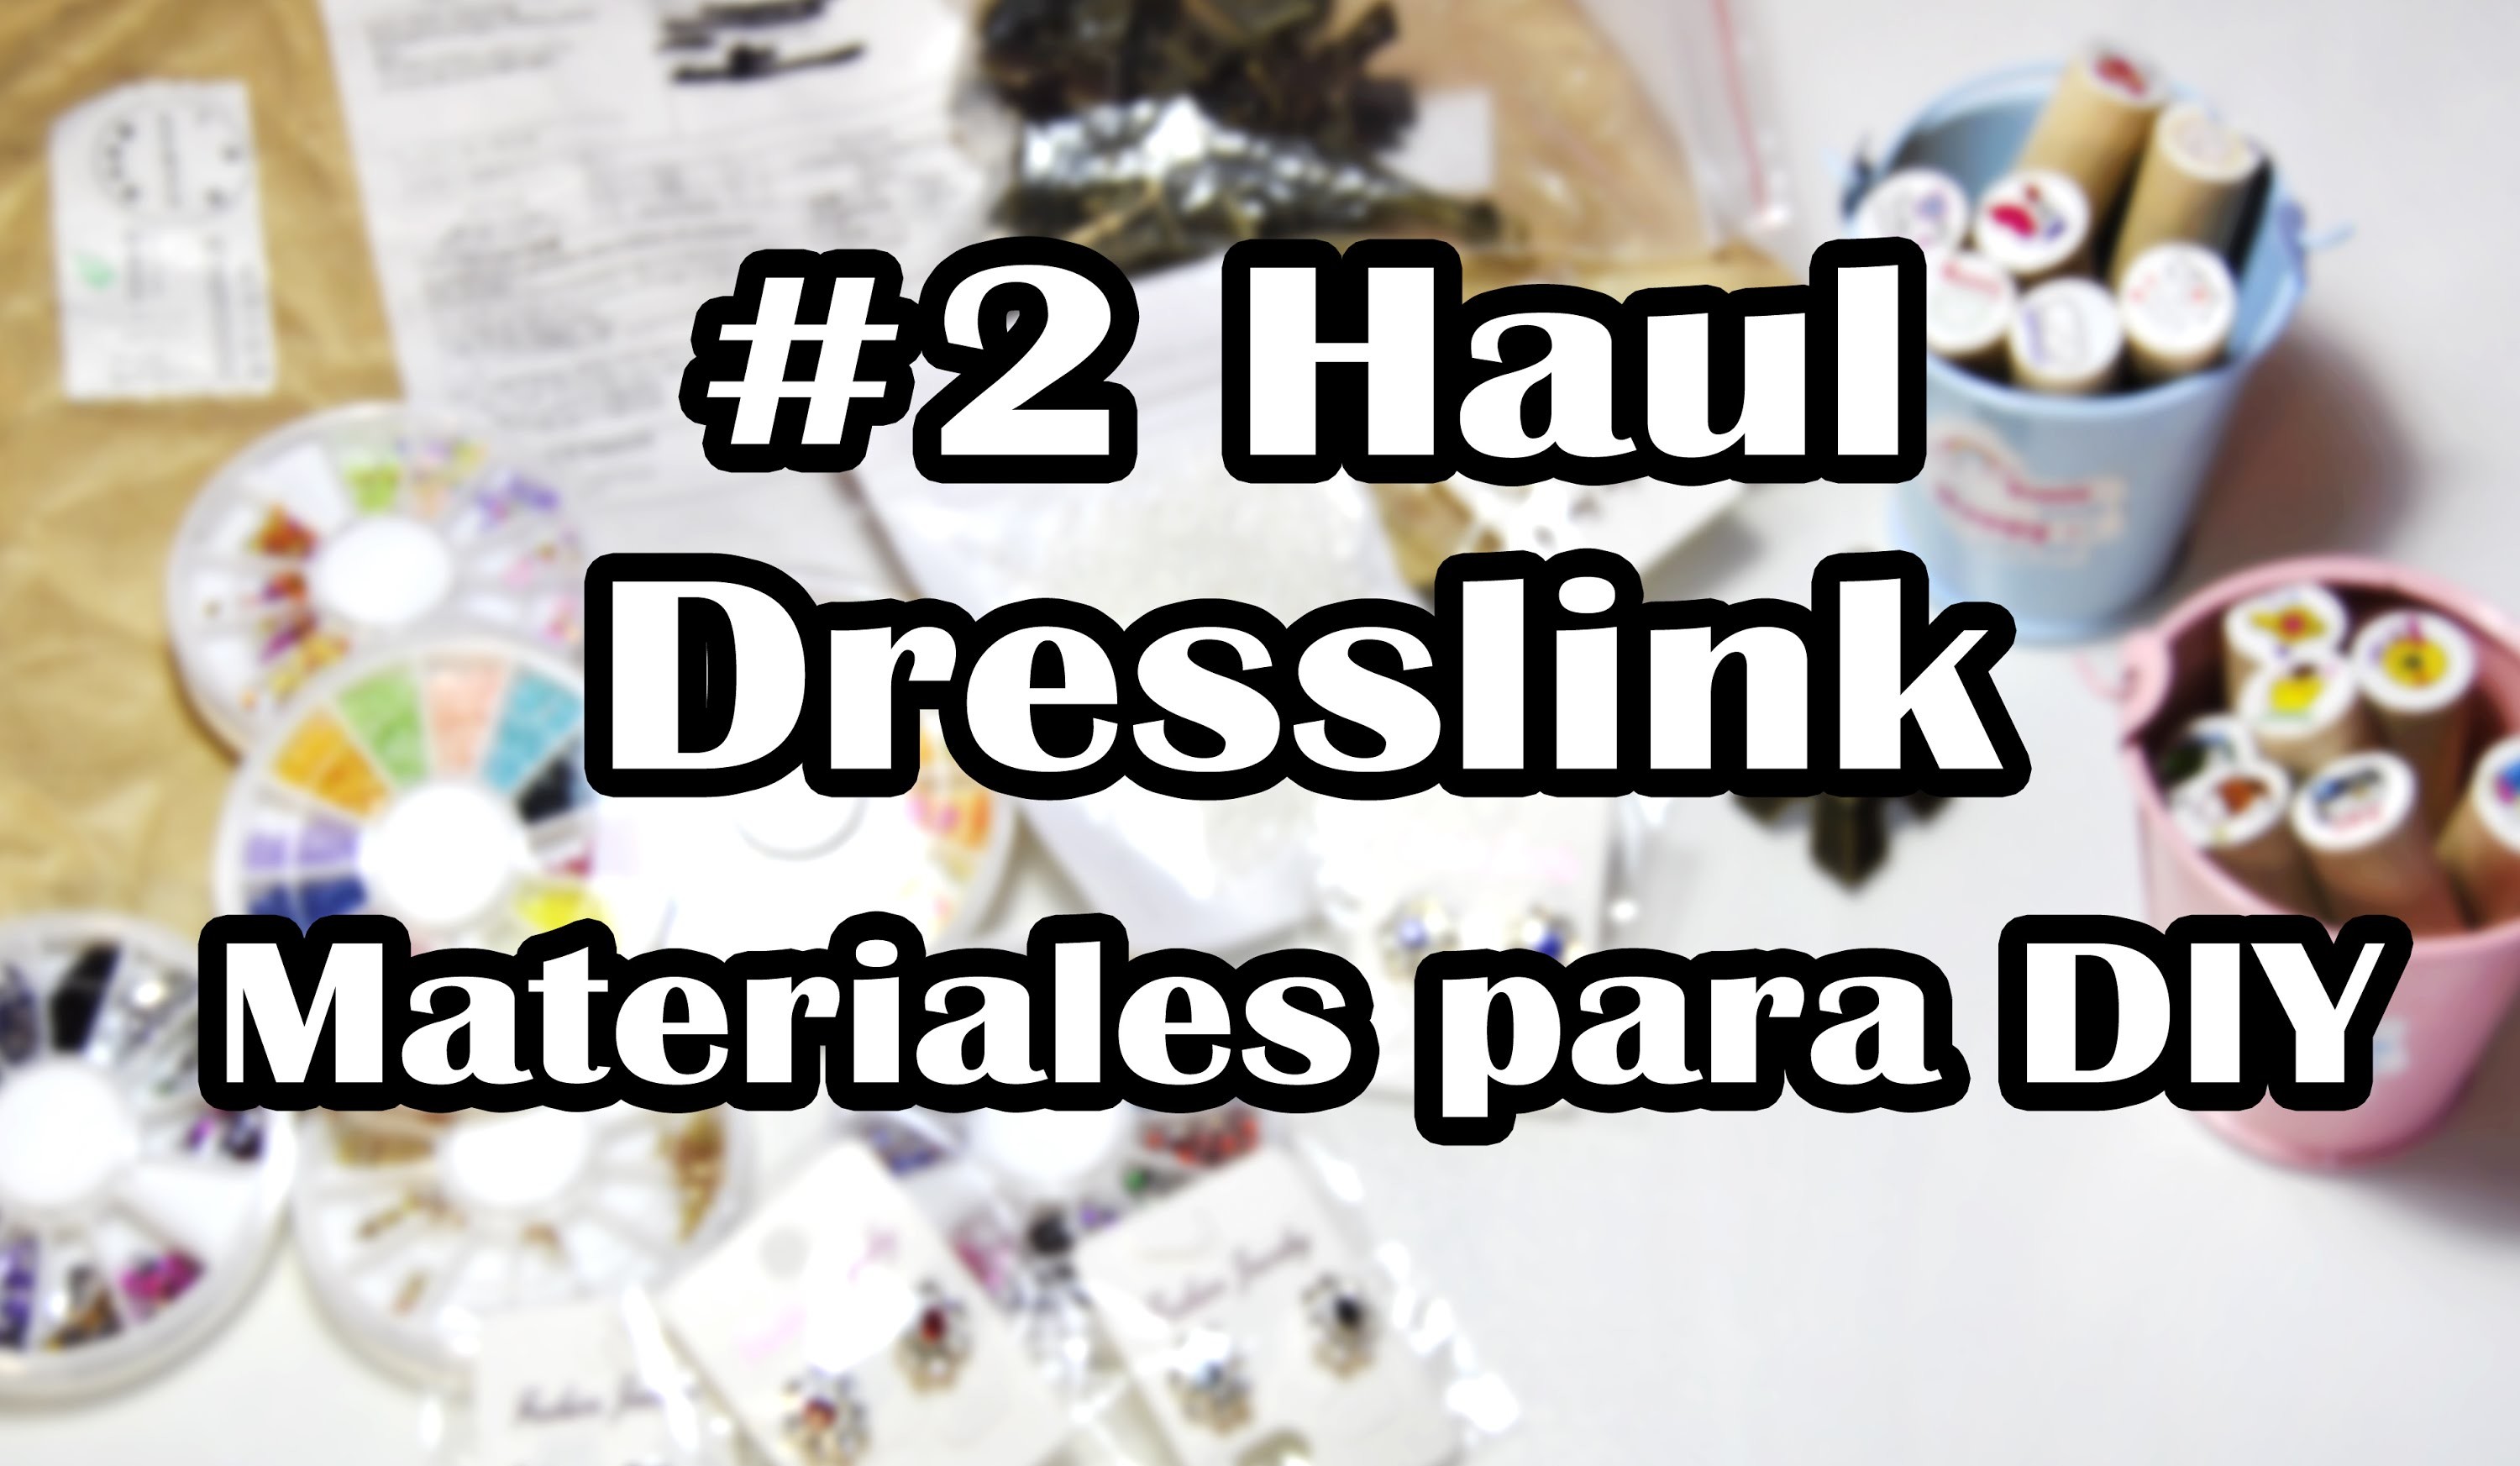 #2 Haul Dresslink [Materiales DIY]